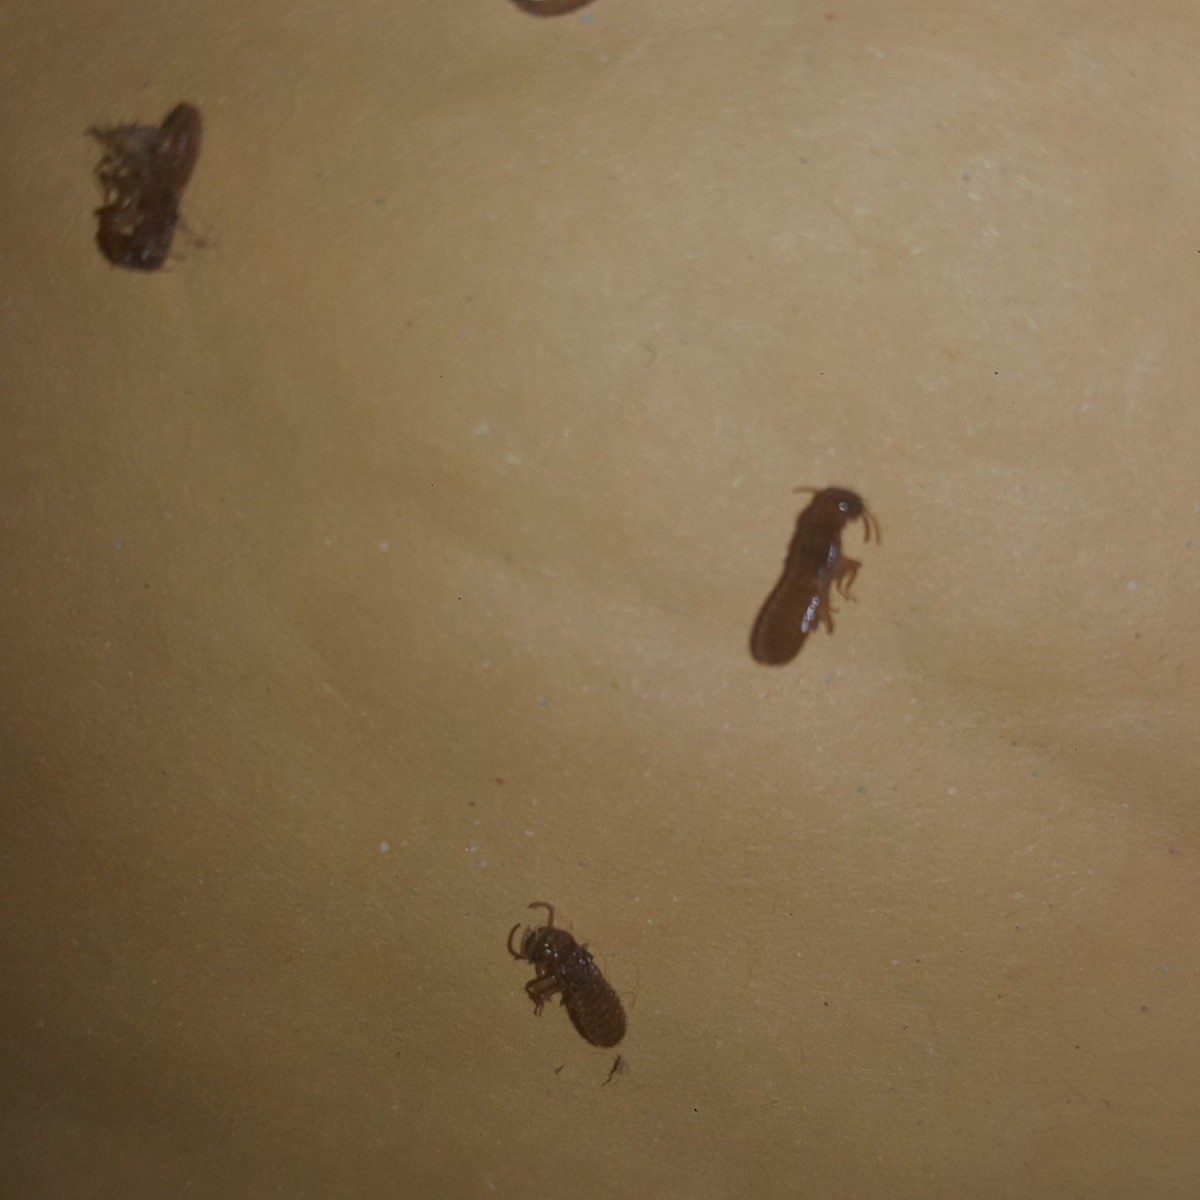 Identifying Small Brown Bugs? | ThriftyFun